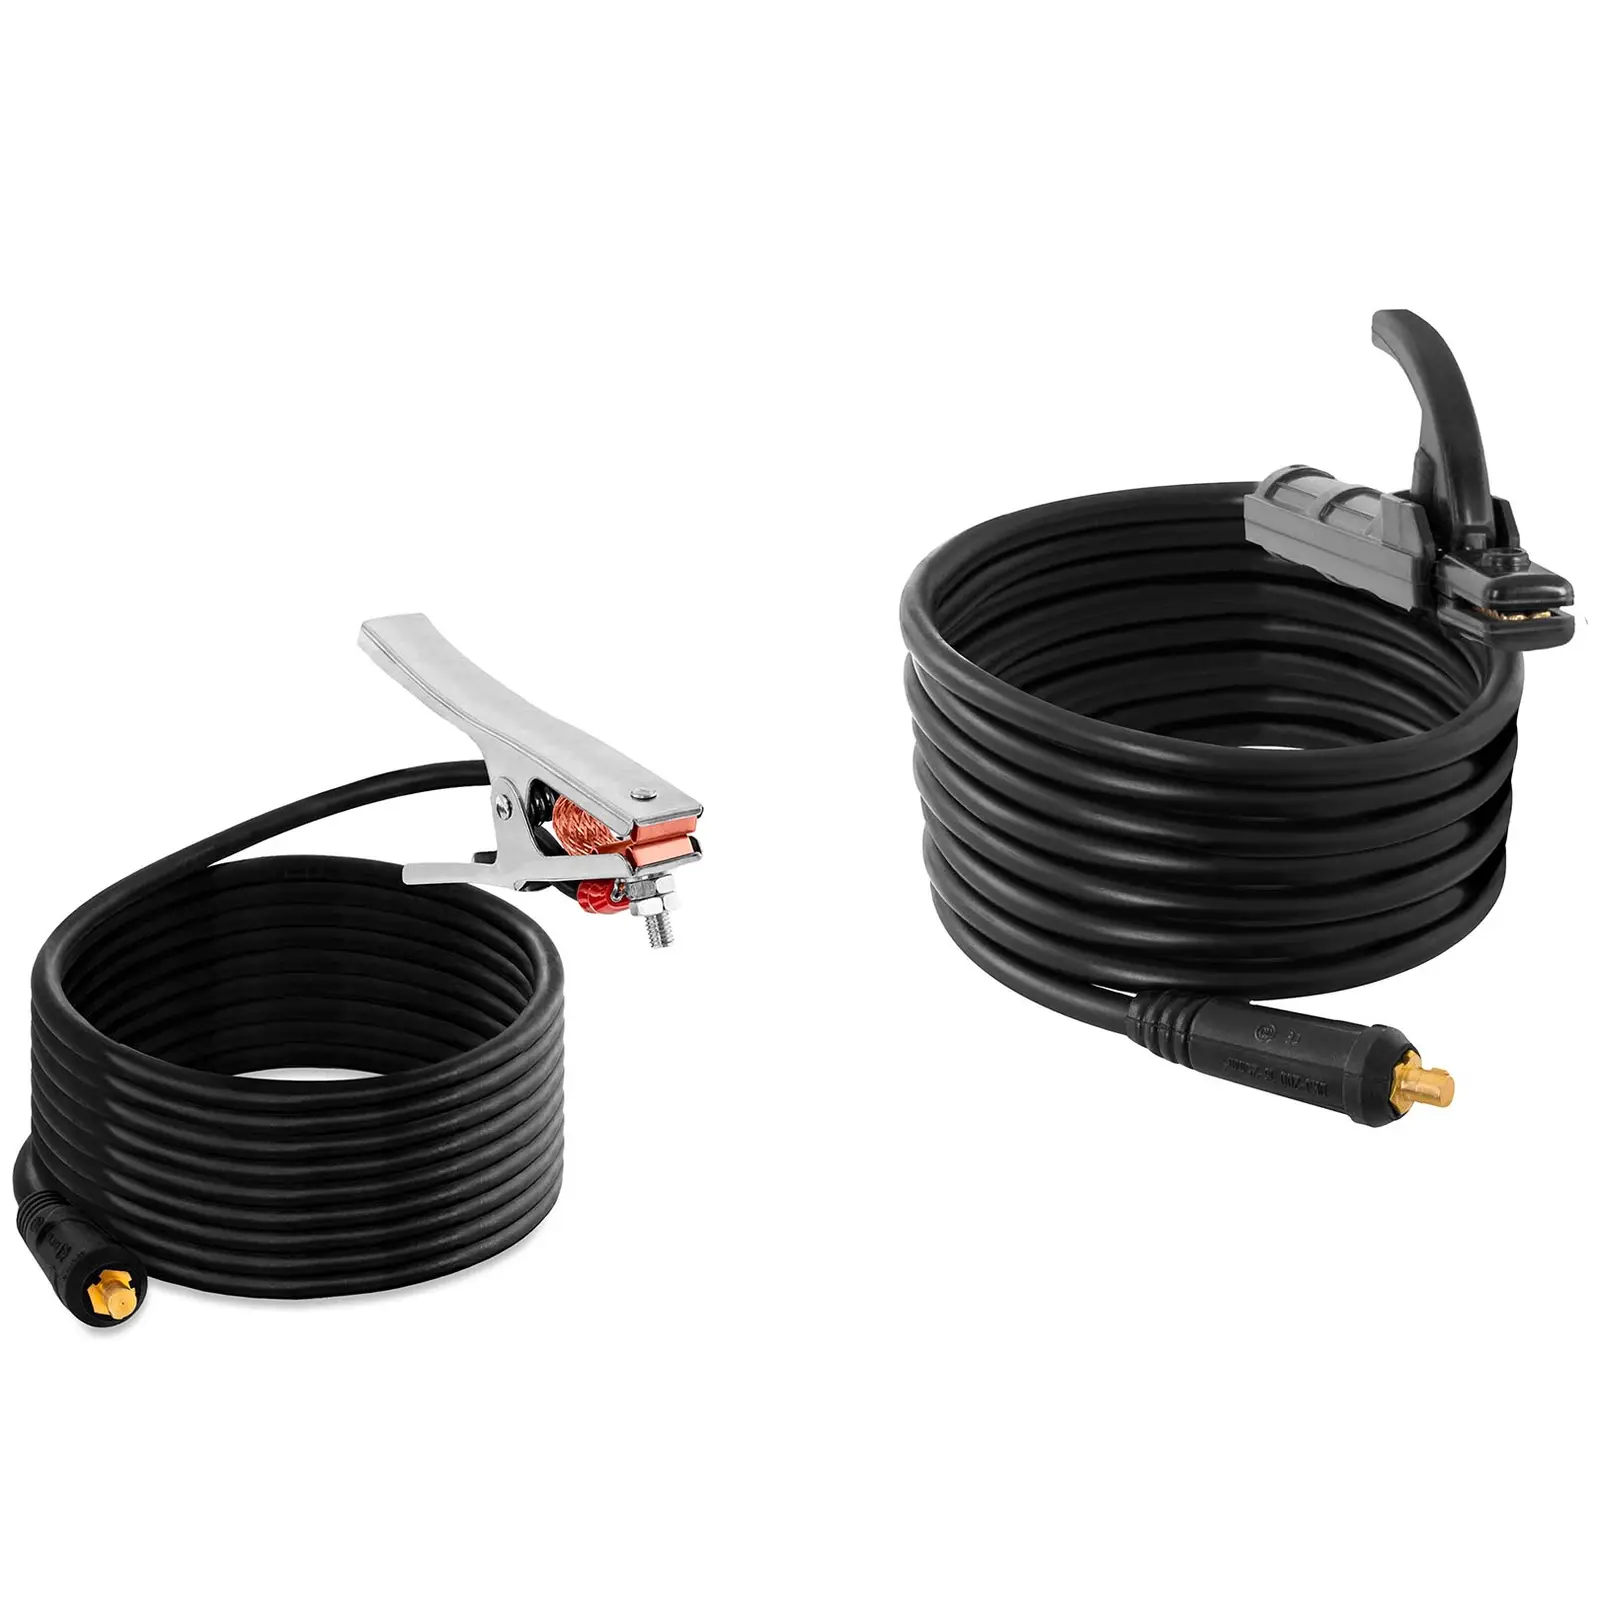 MMA-svets - IGBT - 120 A - 8 m kabel